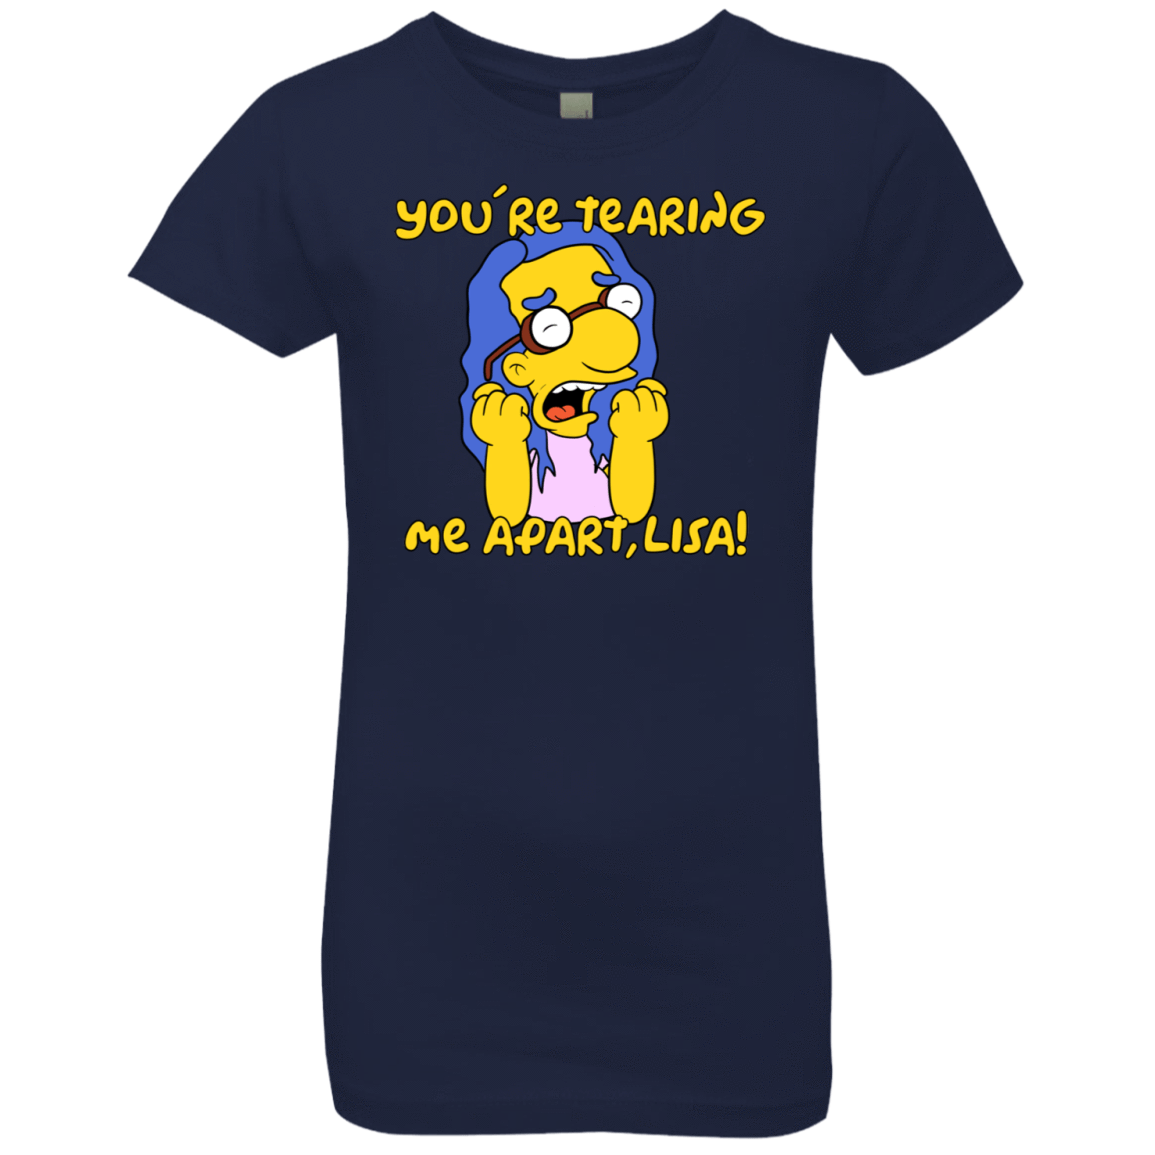 T-Shirts Midnight Navy / YXS Milhouse Wiseau Girls Premium T-Shirt